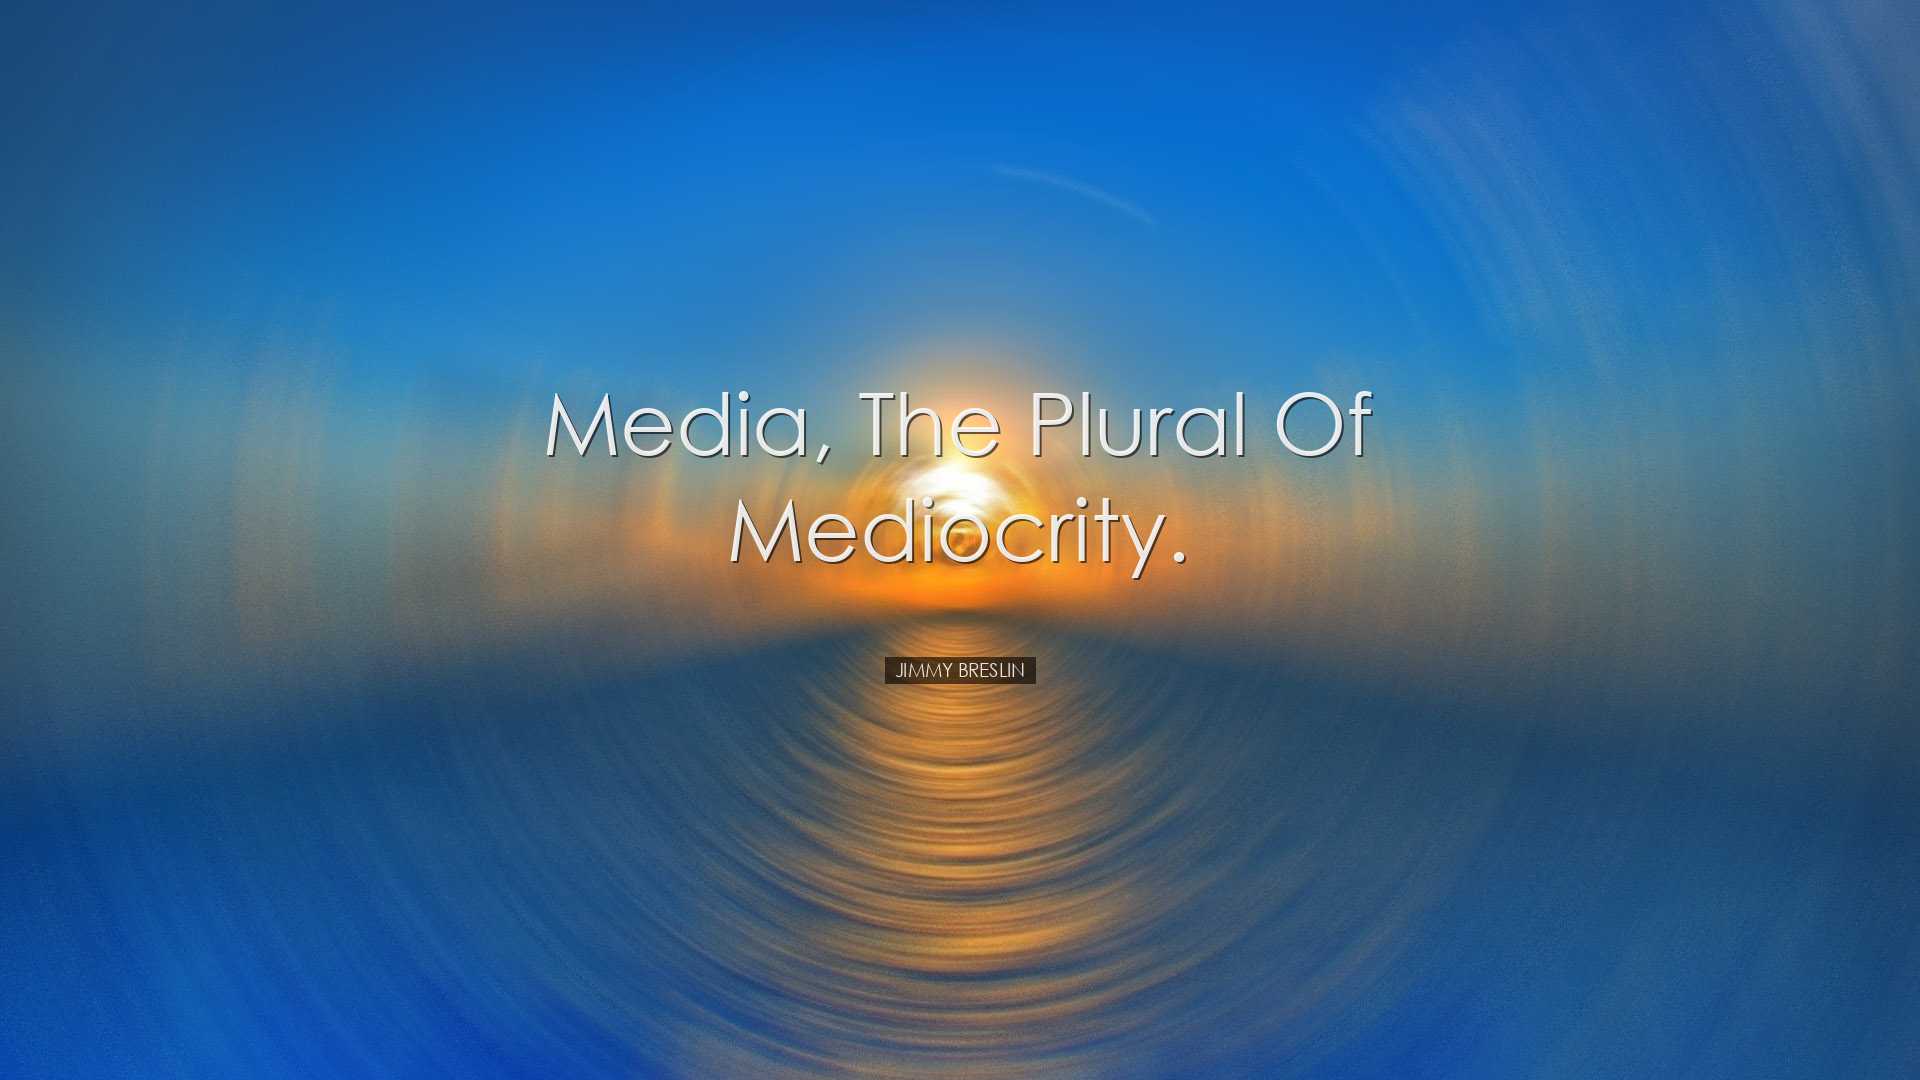 Media, the plural of mediocrity. - Jimmy Breslin